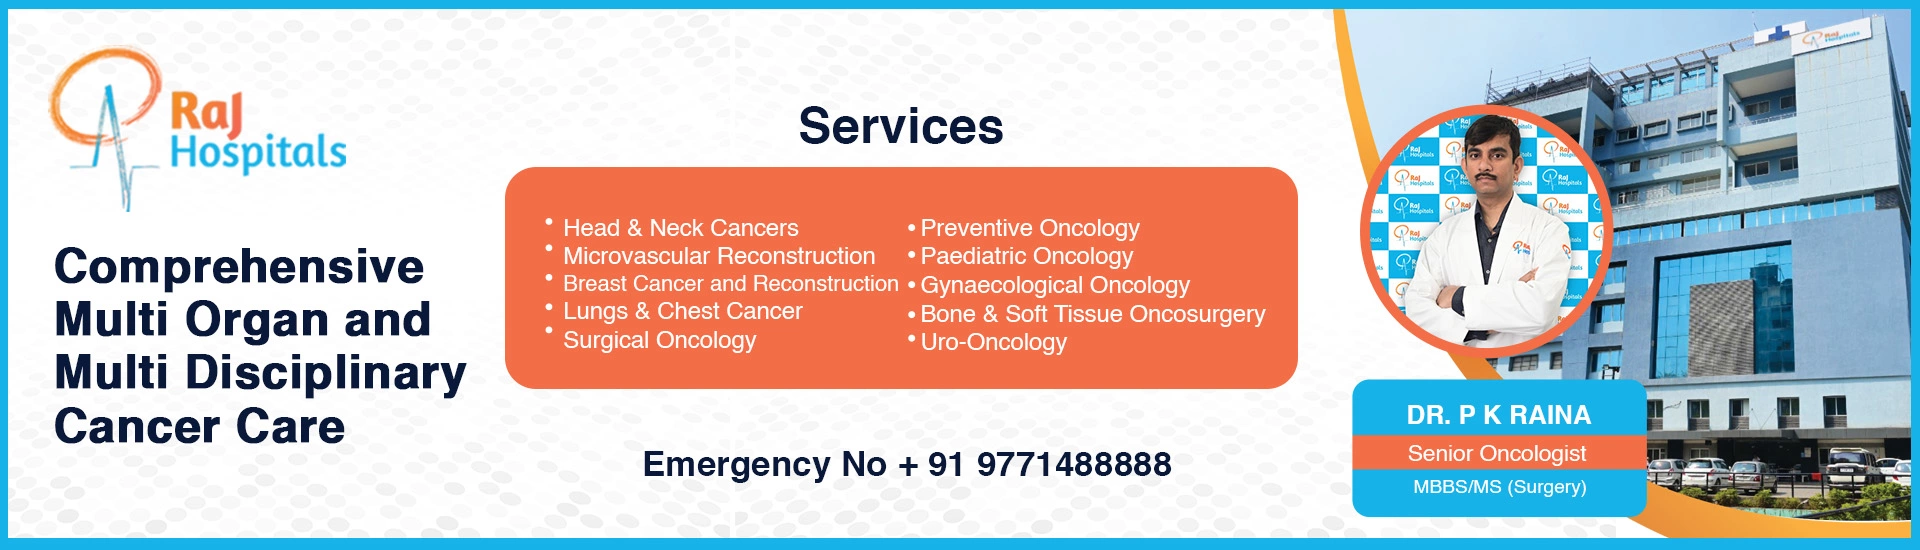 Best Hospital in Ranchi, Best Multispecialty Hospital in Ranchi, Super-specialty hospital in Ranchi, Raj Hospital